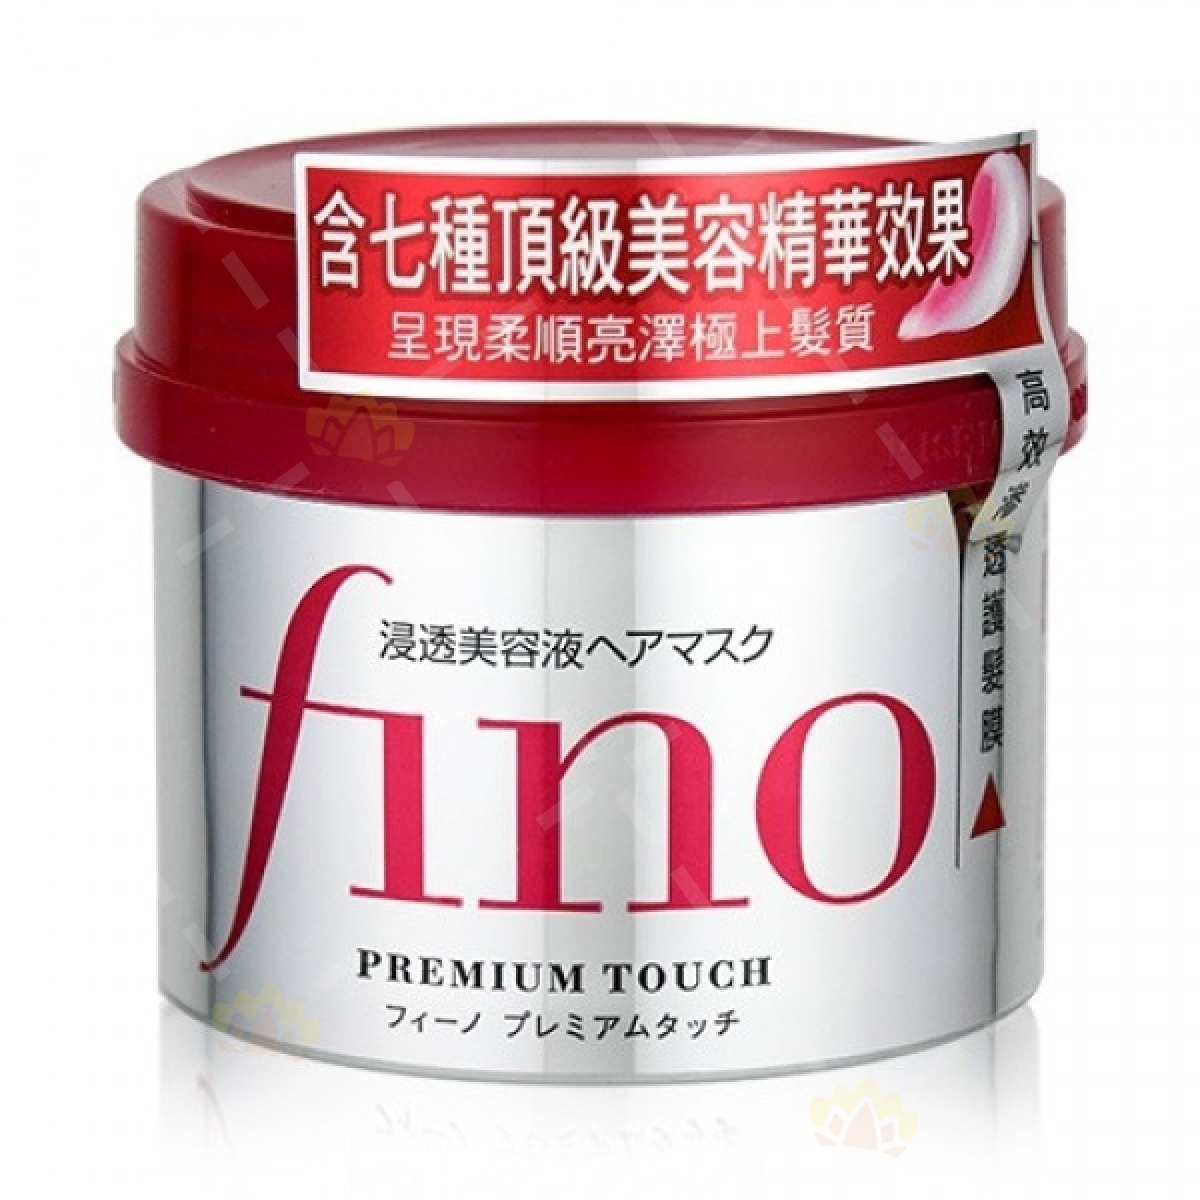 Shiseido 資生堂 FINO 髮膜 230g | BabyMall